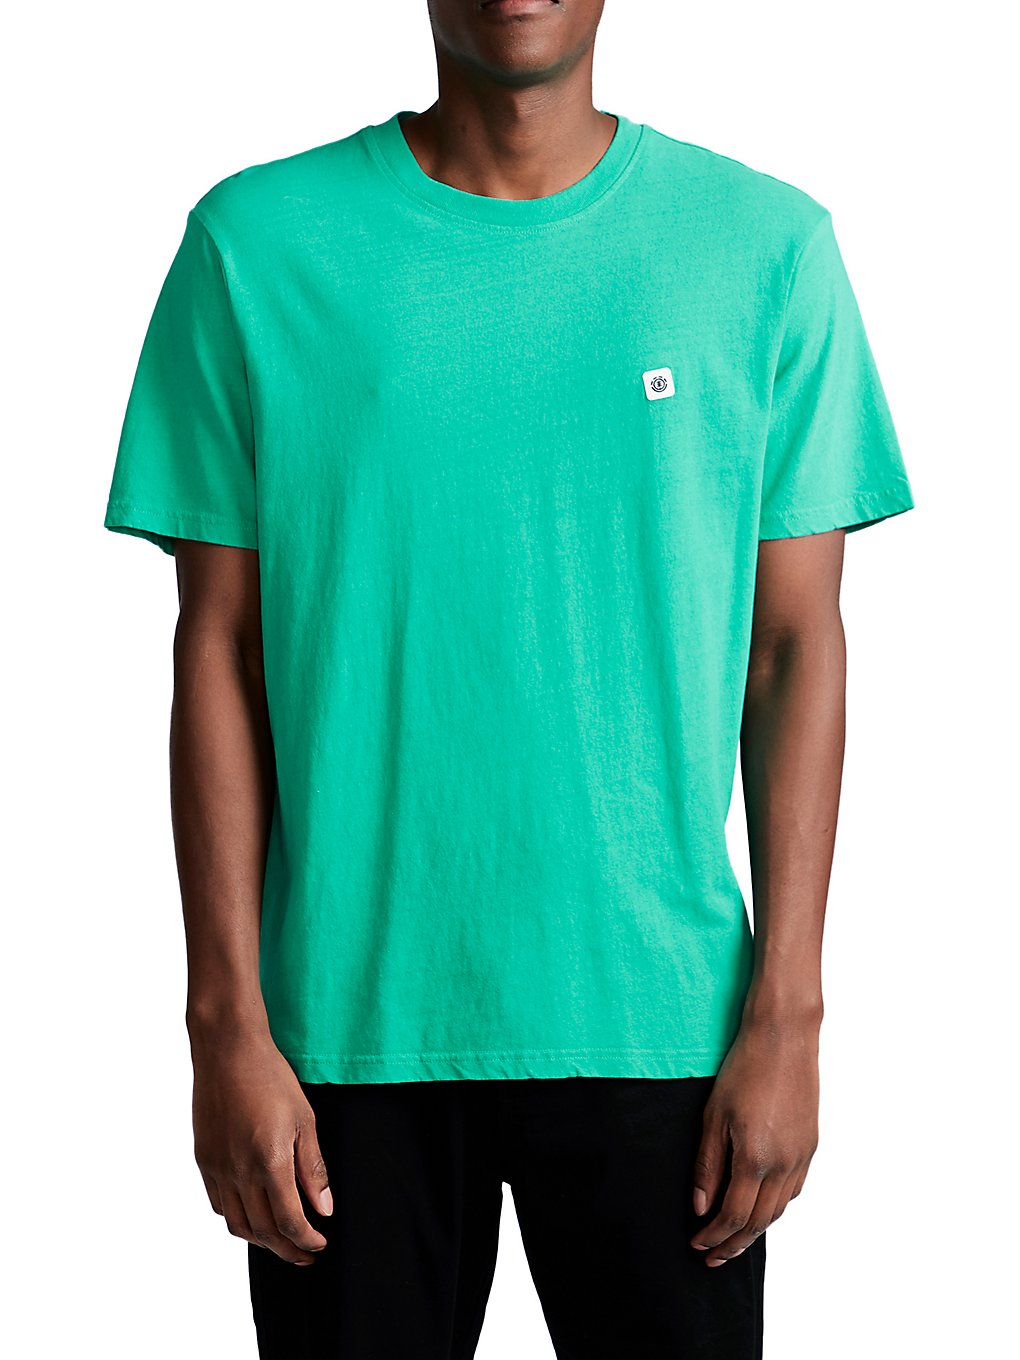 Element sunny t-shirt vihreä, element